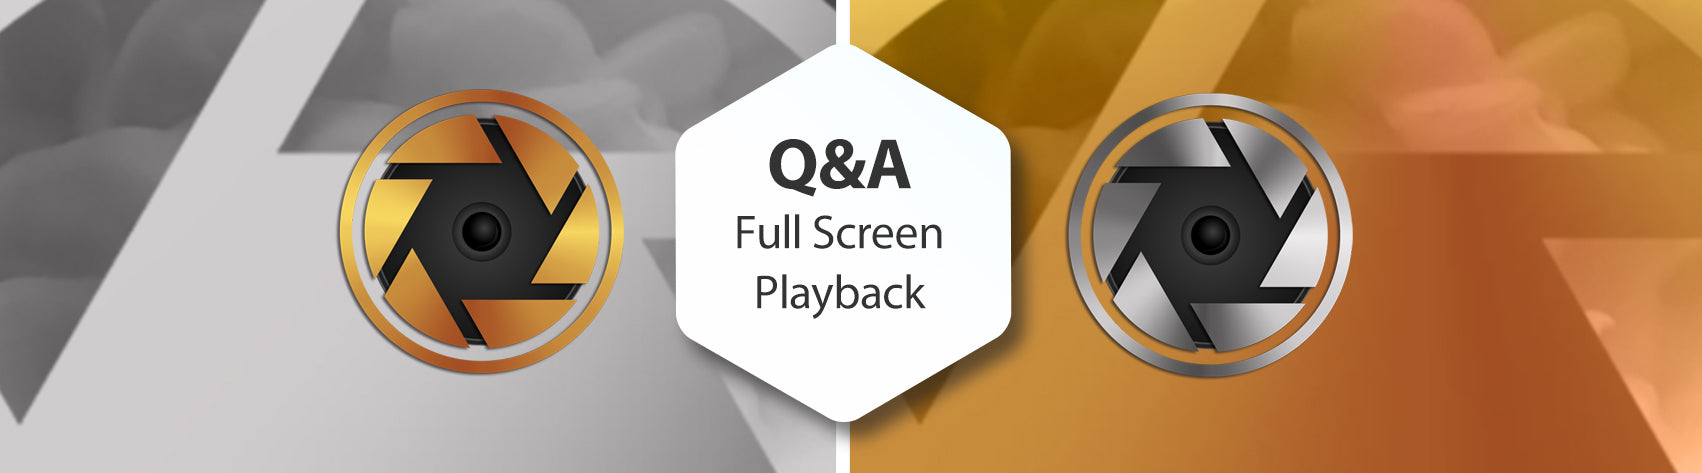 Q&A - Full Screen Playback